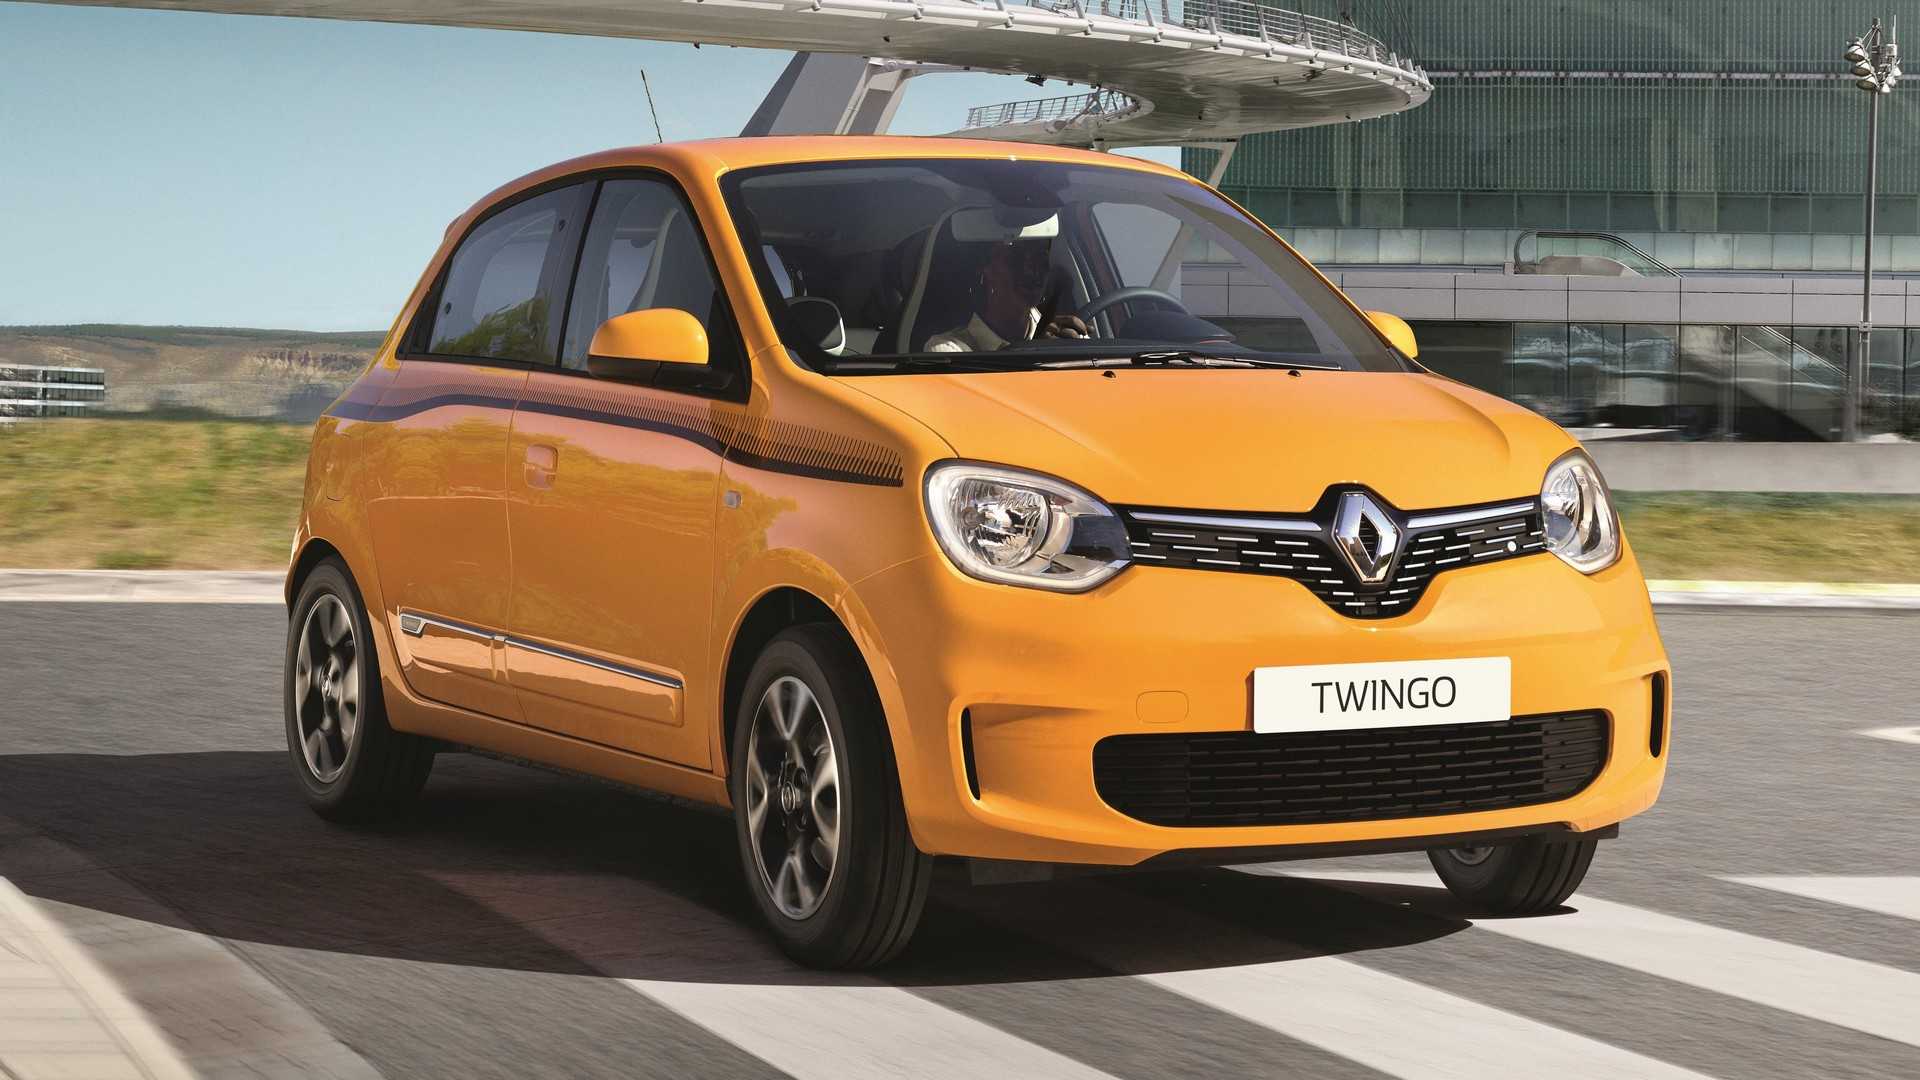 Renault Twingo Wallpapers